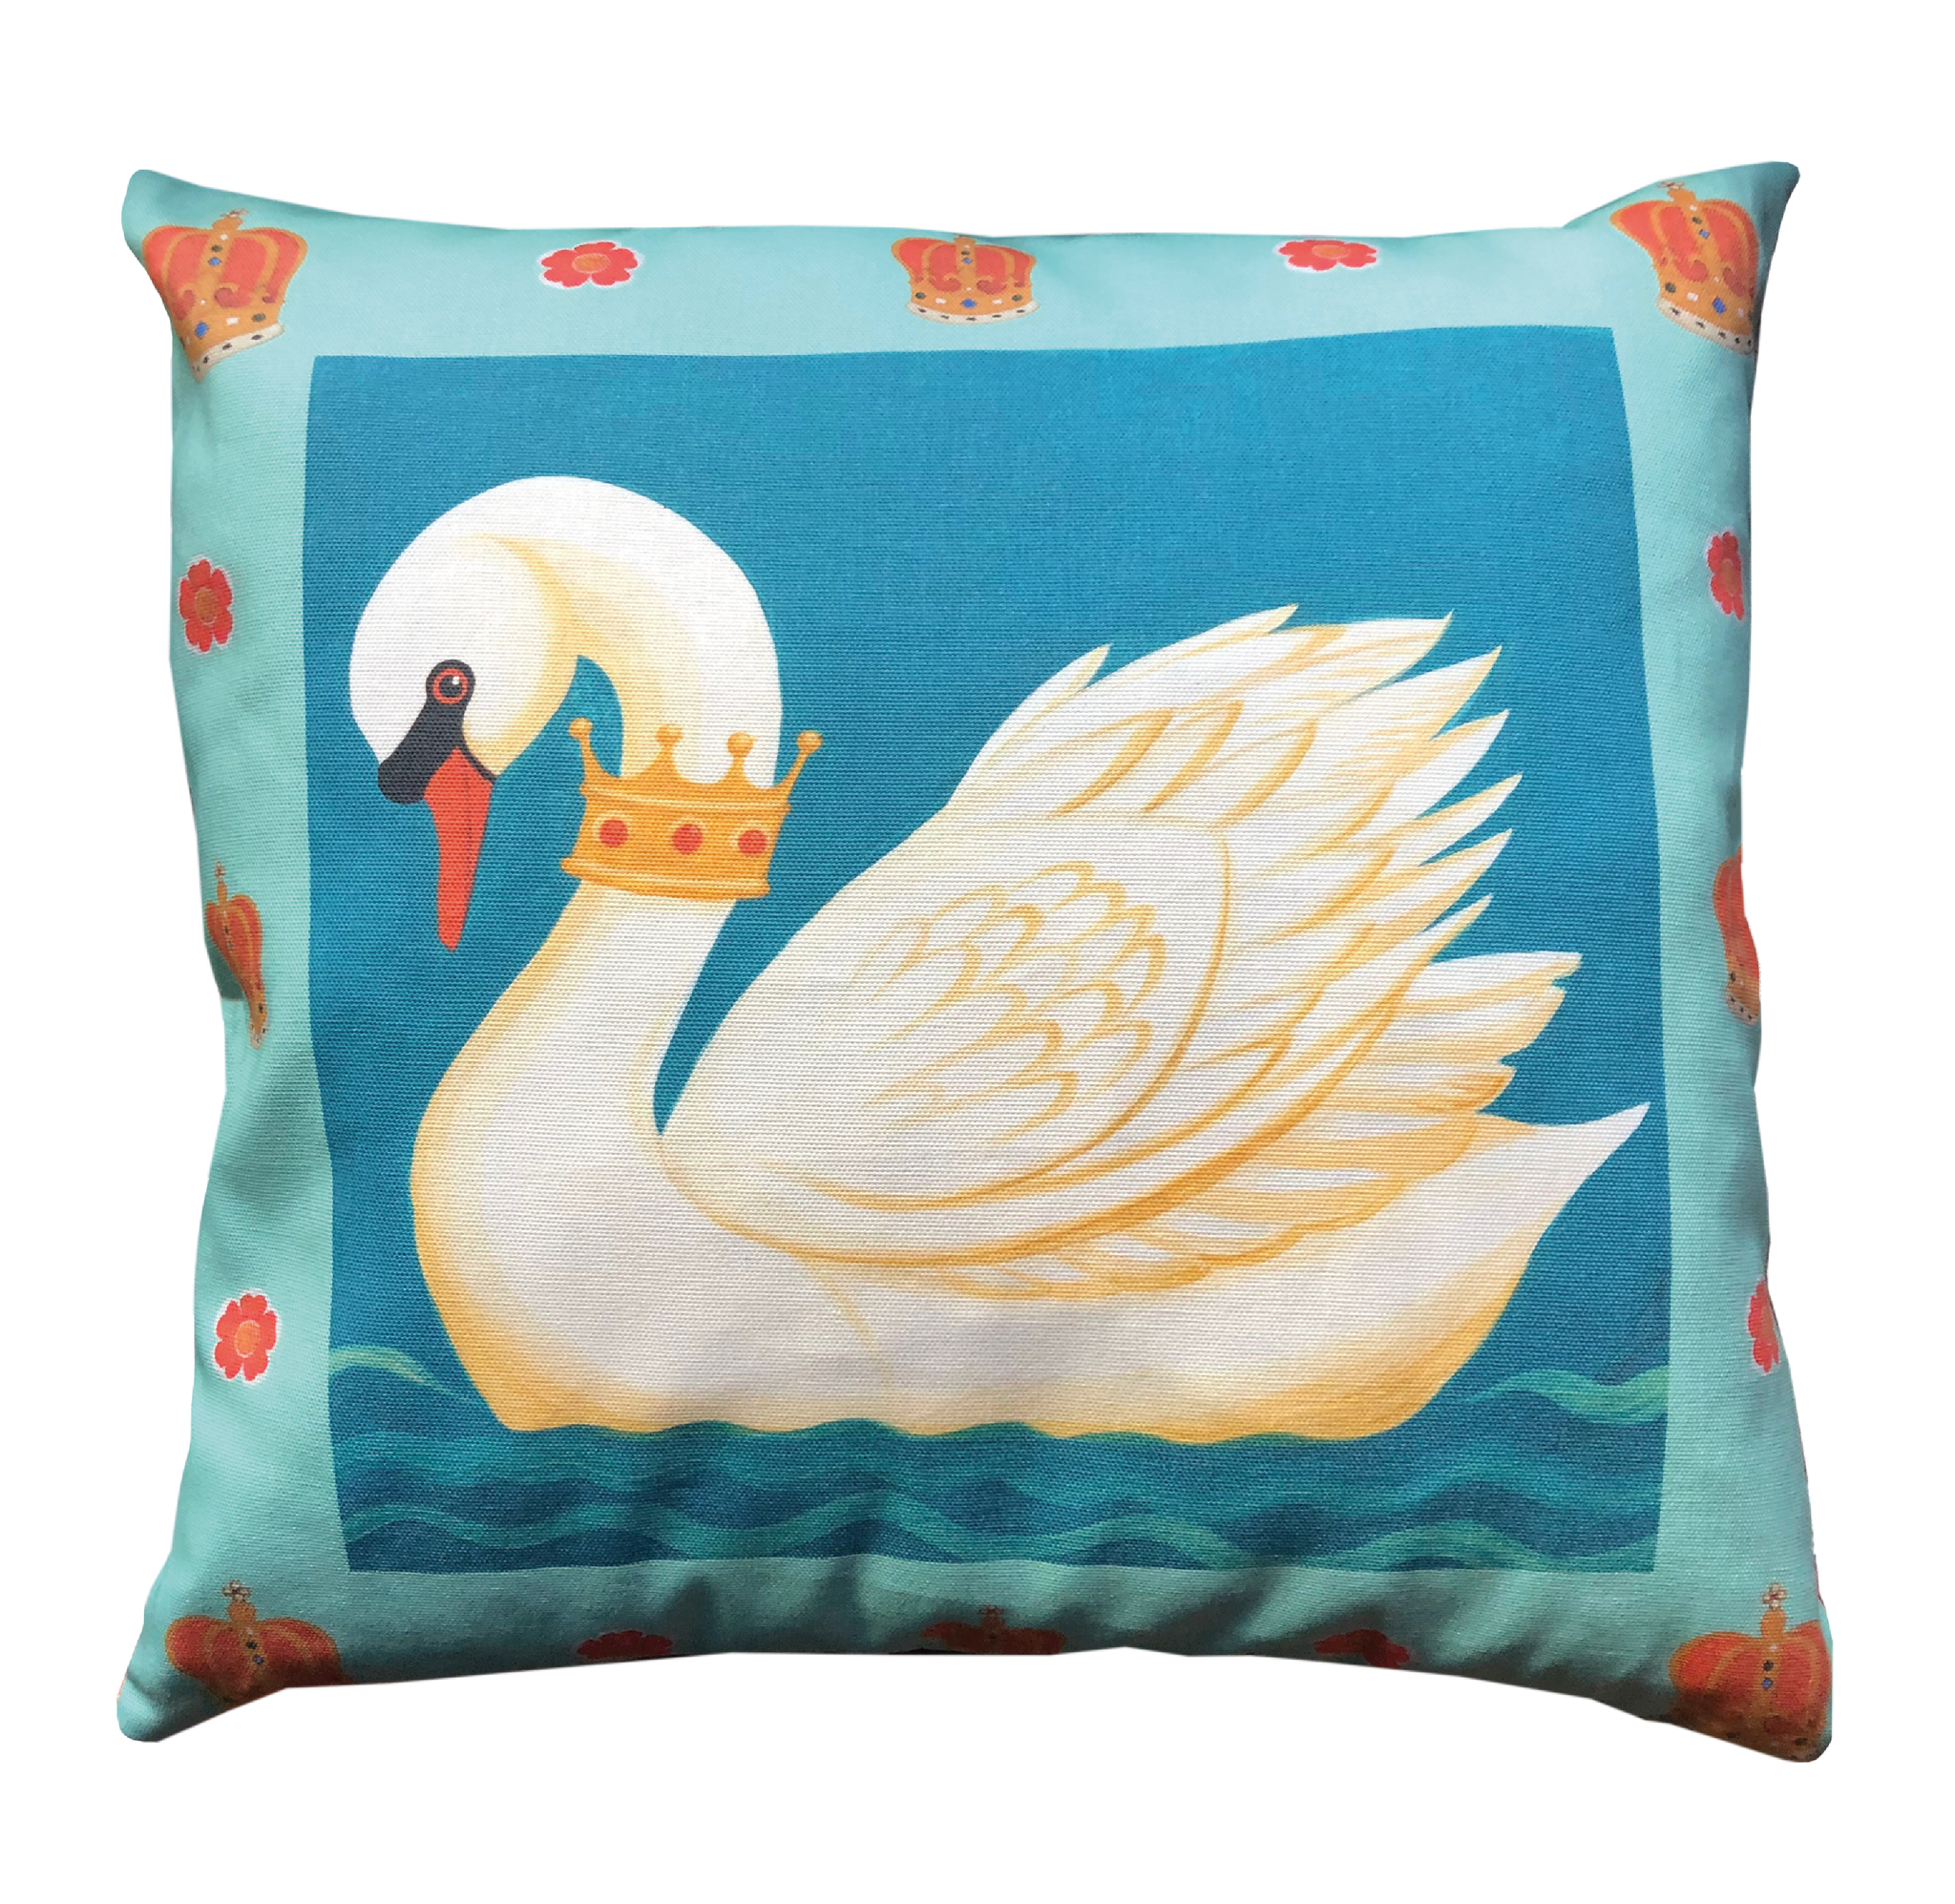 The King's Swan Cushion